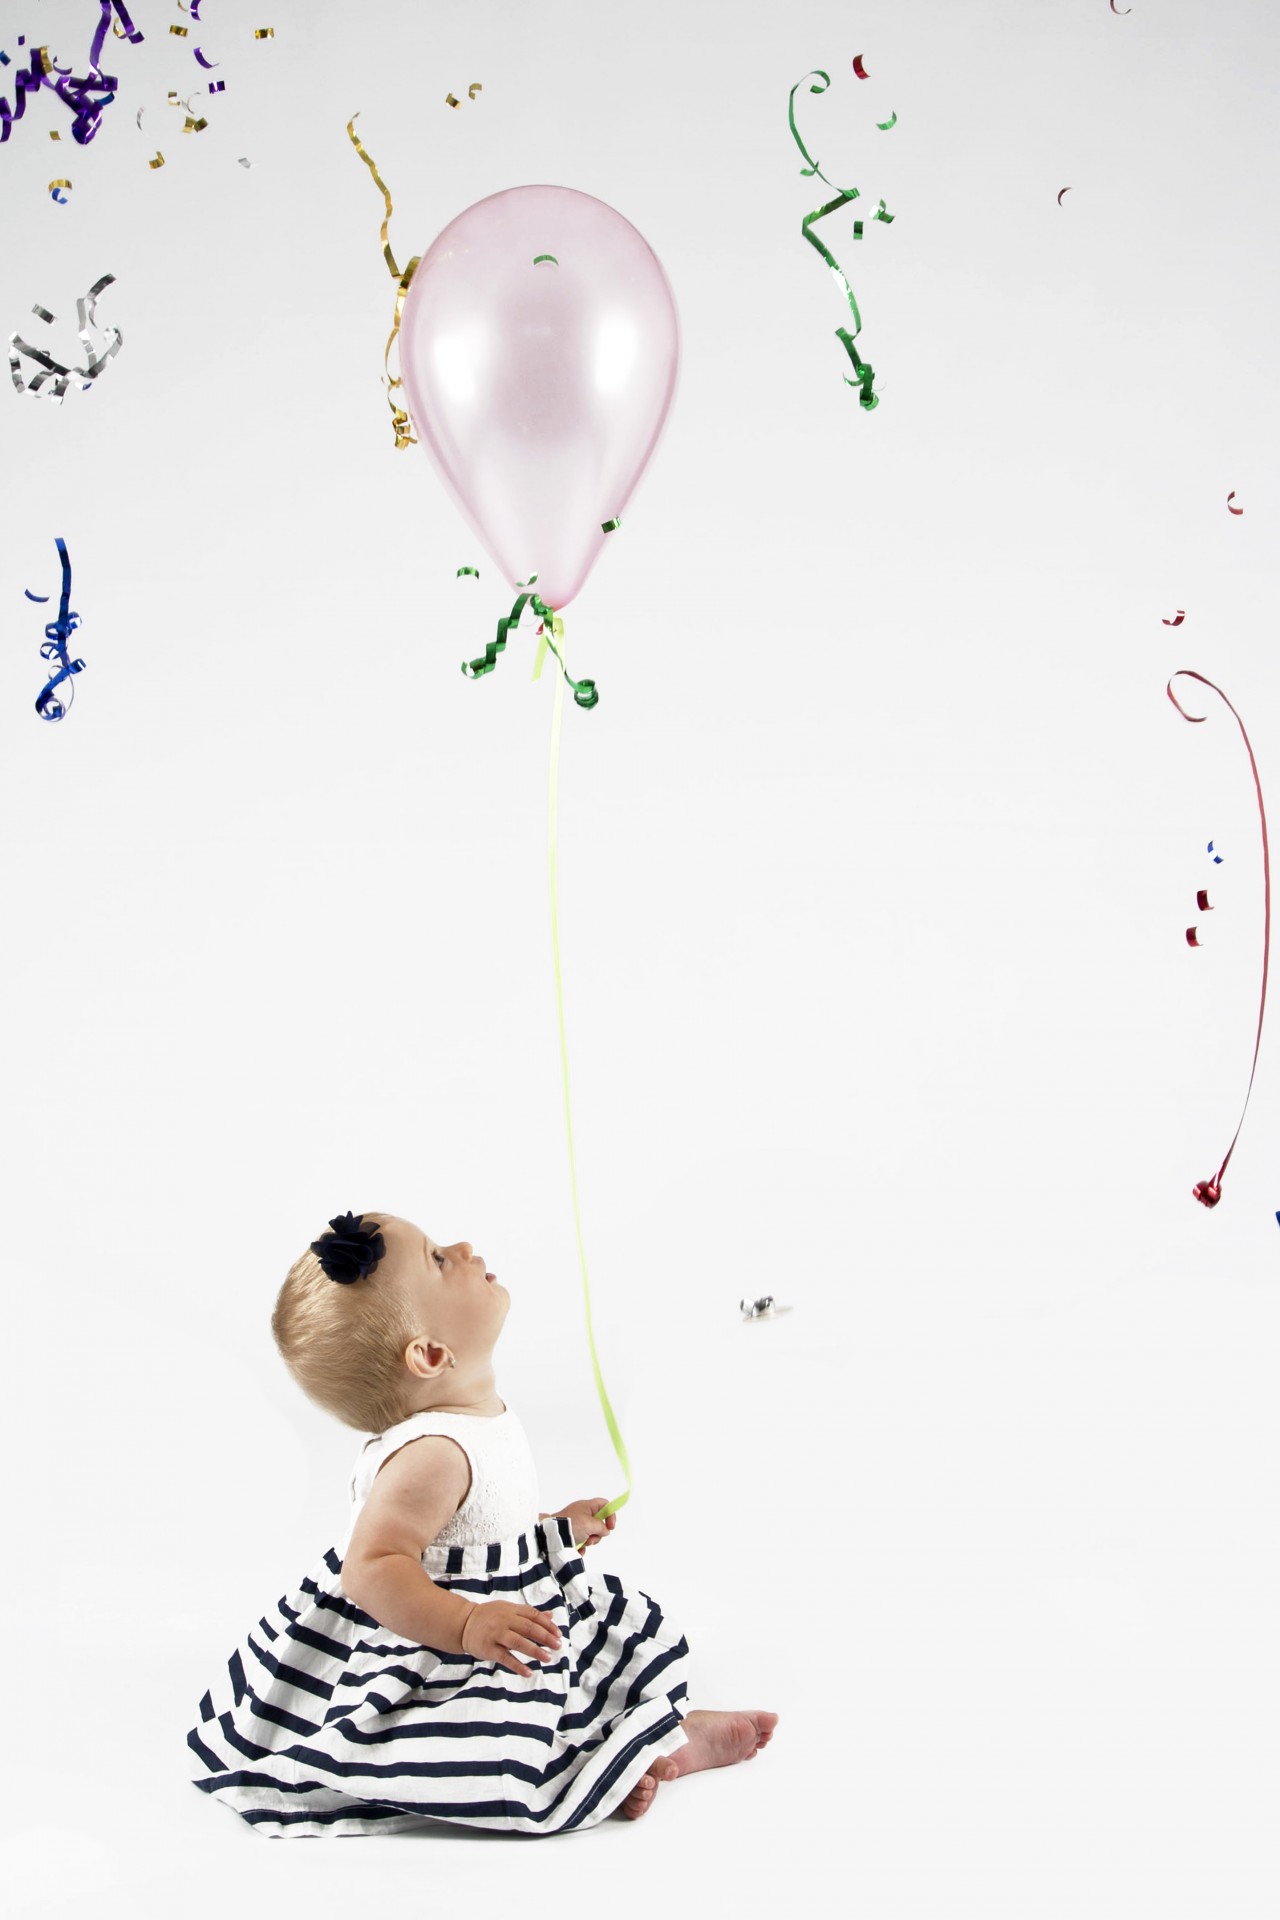 baby girl balloon free photo